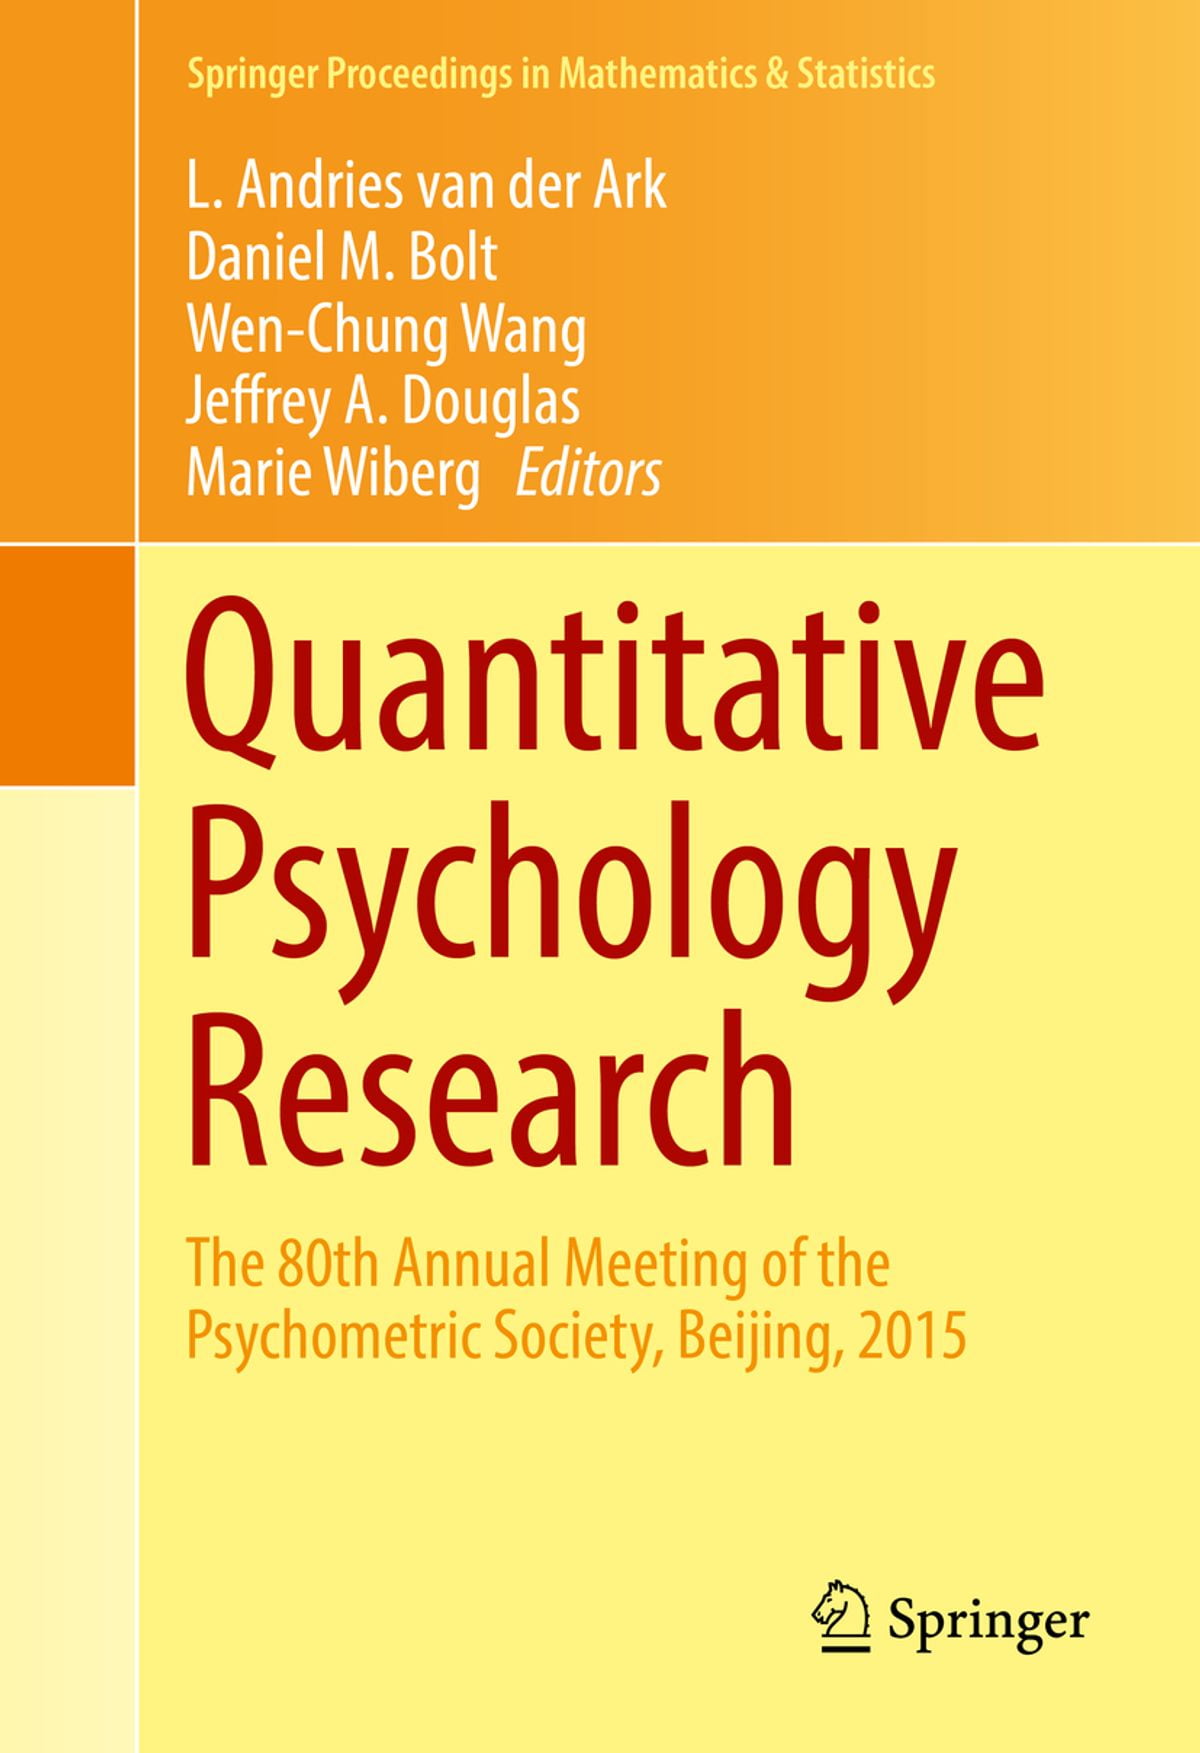 quantitative psychology phd programs